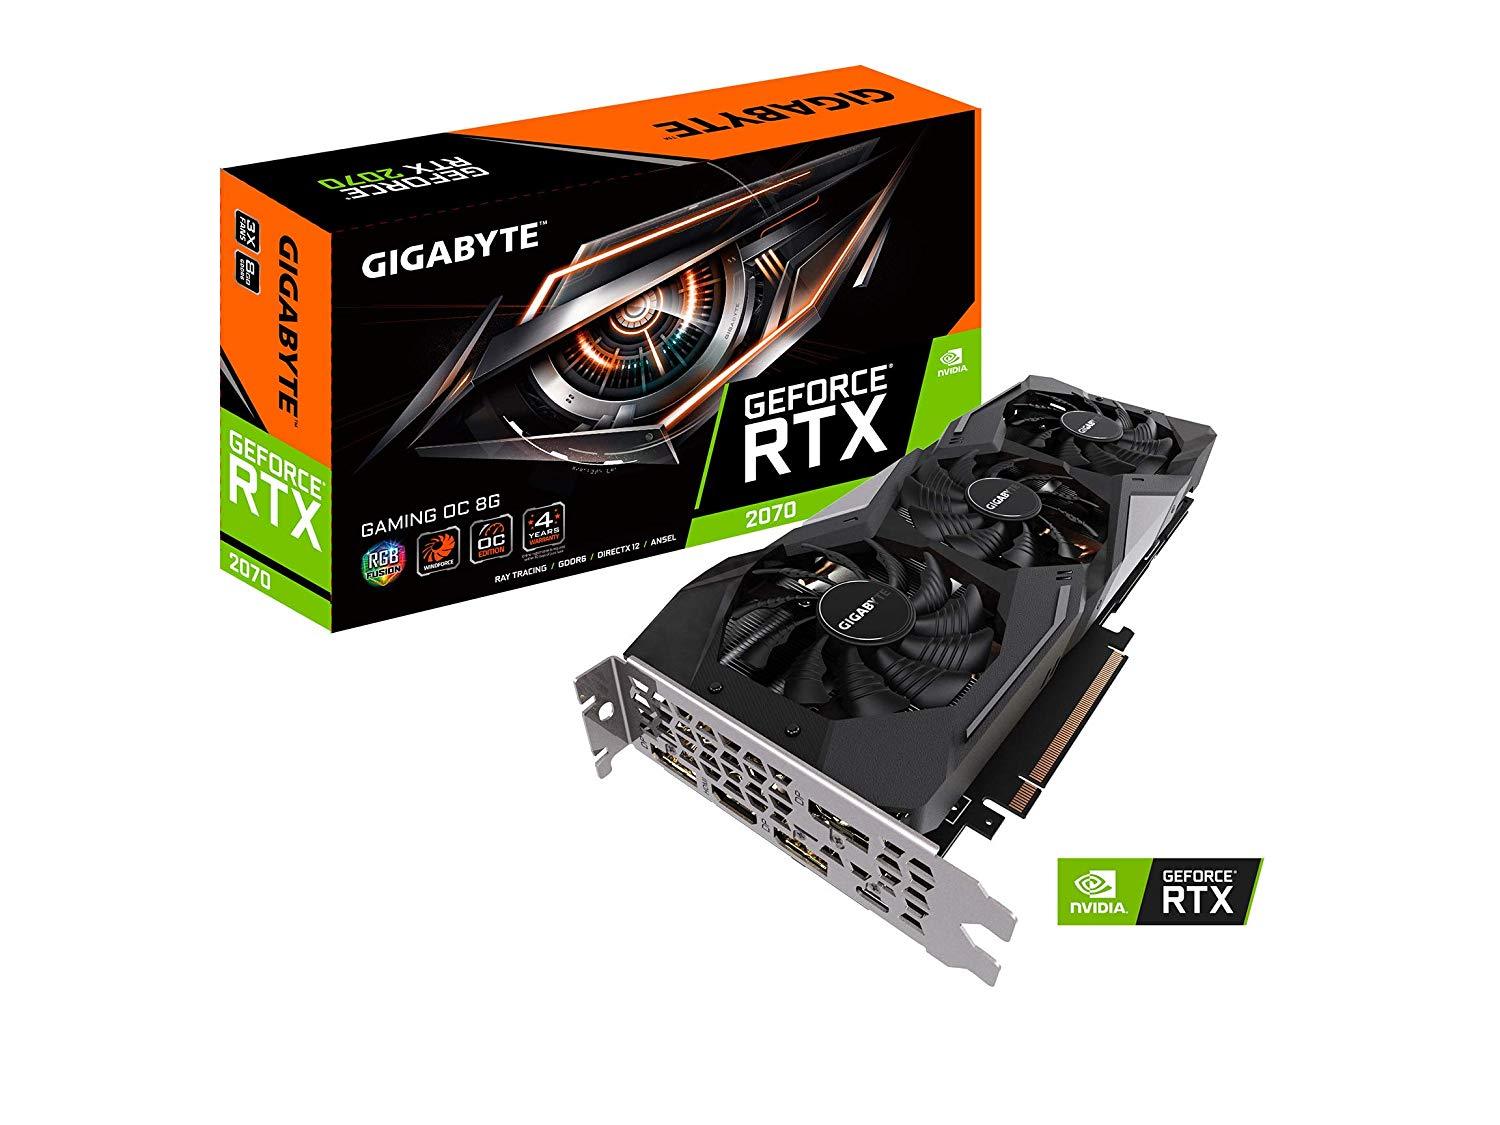 Gigabyte GeForce RTX 2070 Gaming OC 8GB GDDR6 PCI-E Gen 4x4 - Graphics Card - Black - Store 974 | ستور ٩٧٤